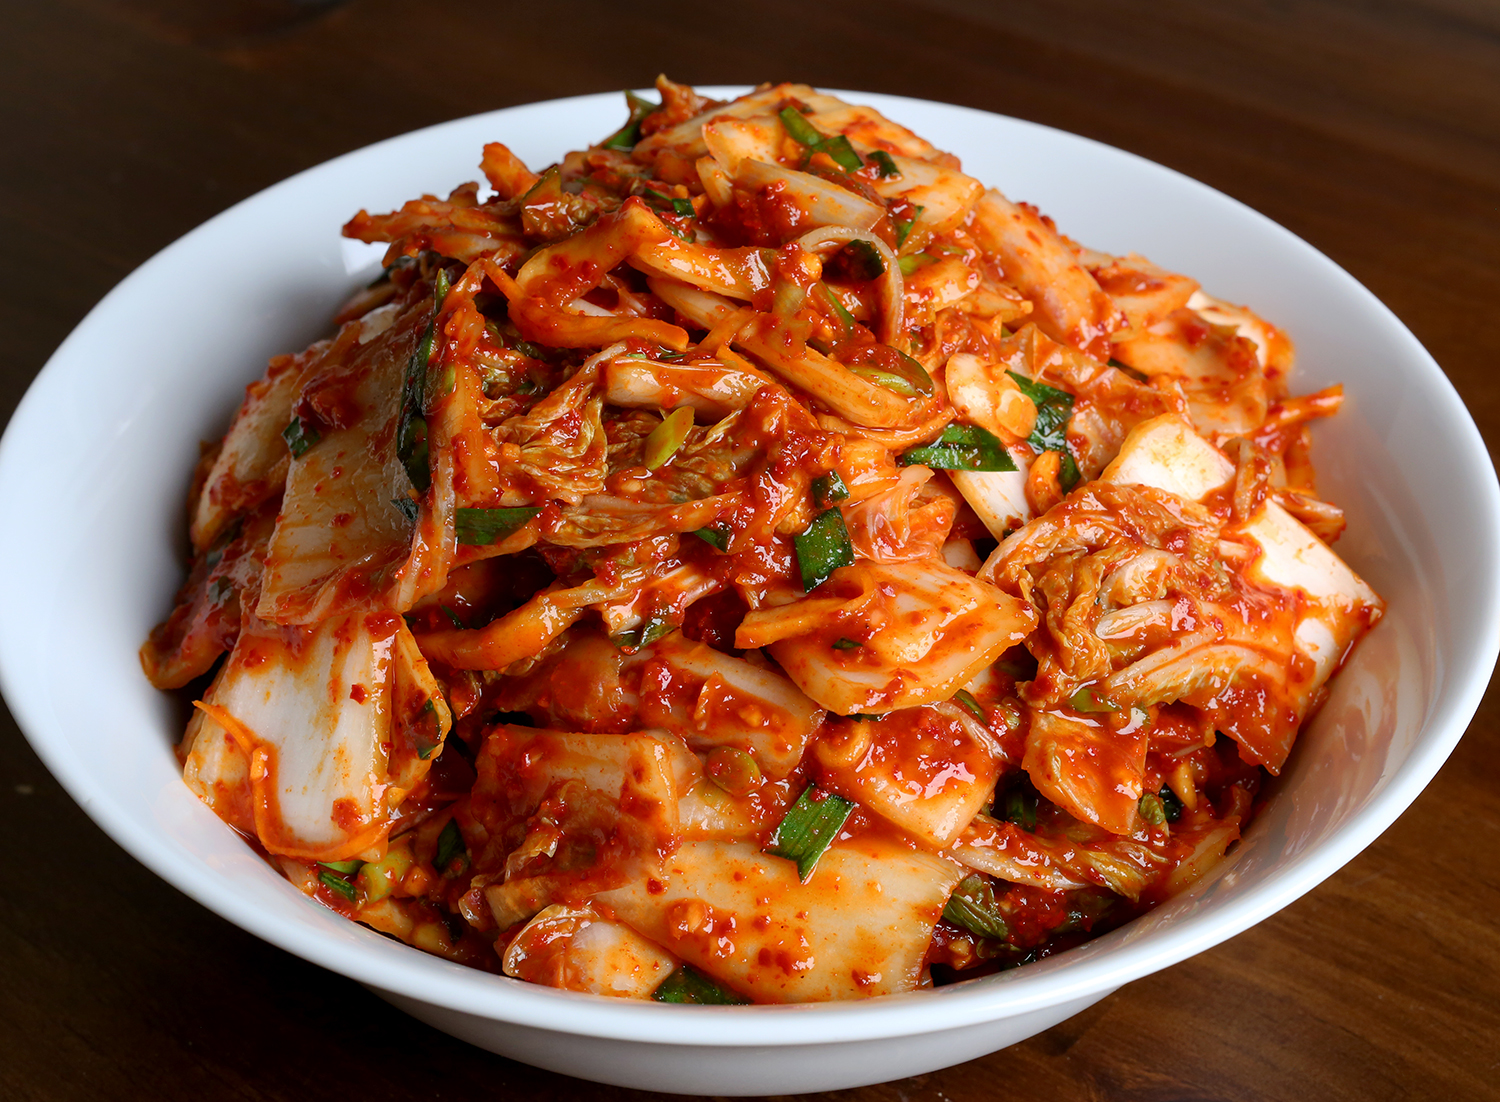 Resepi Kimchi 'Homemade', Halal & Mudah!